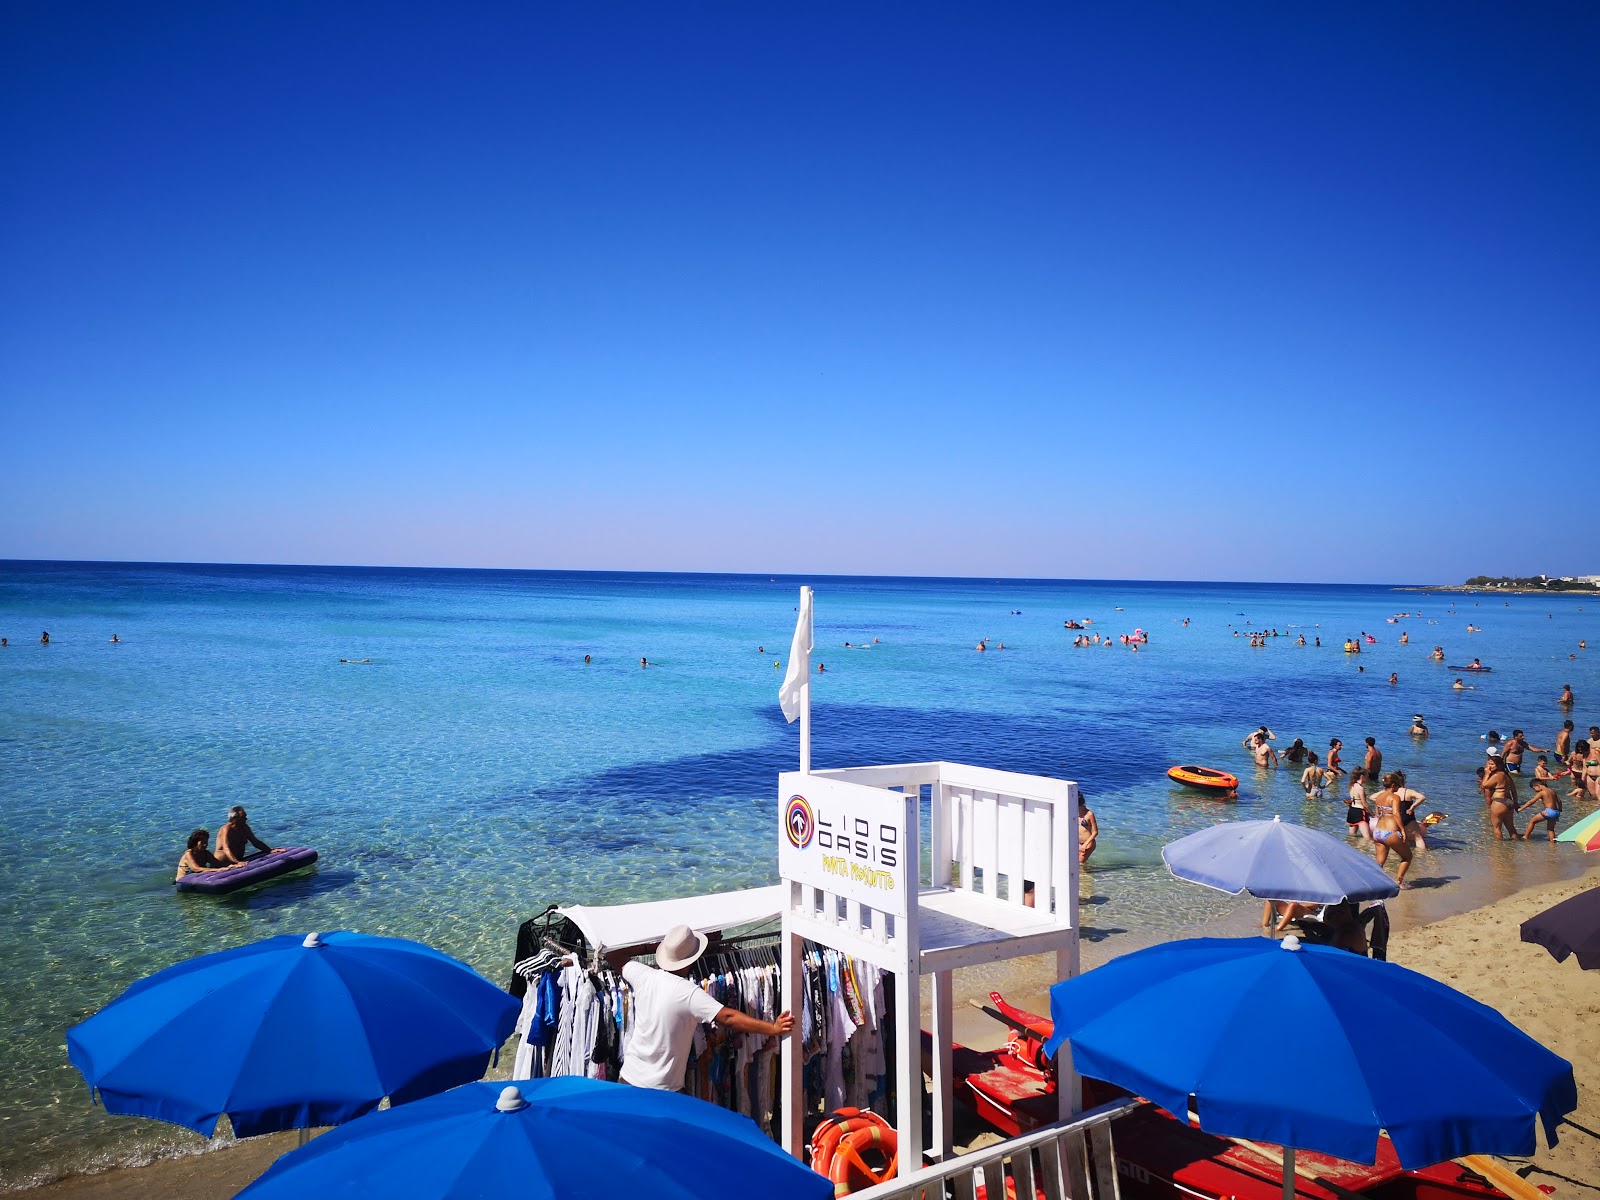 Foto de Spiaggia di Punta Prosciutto - lugar popular entre os apreciadores de relaxamento